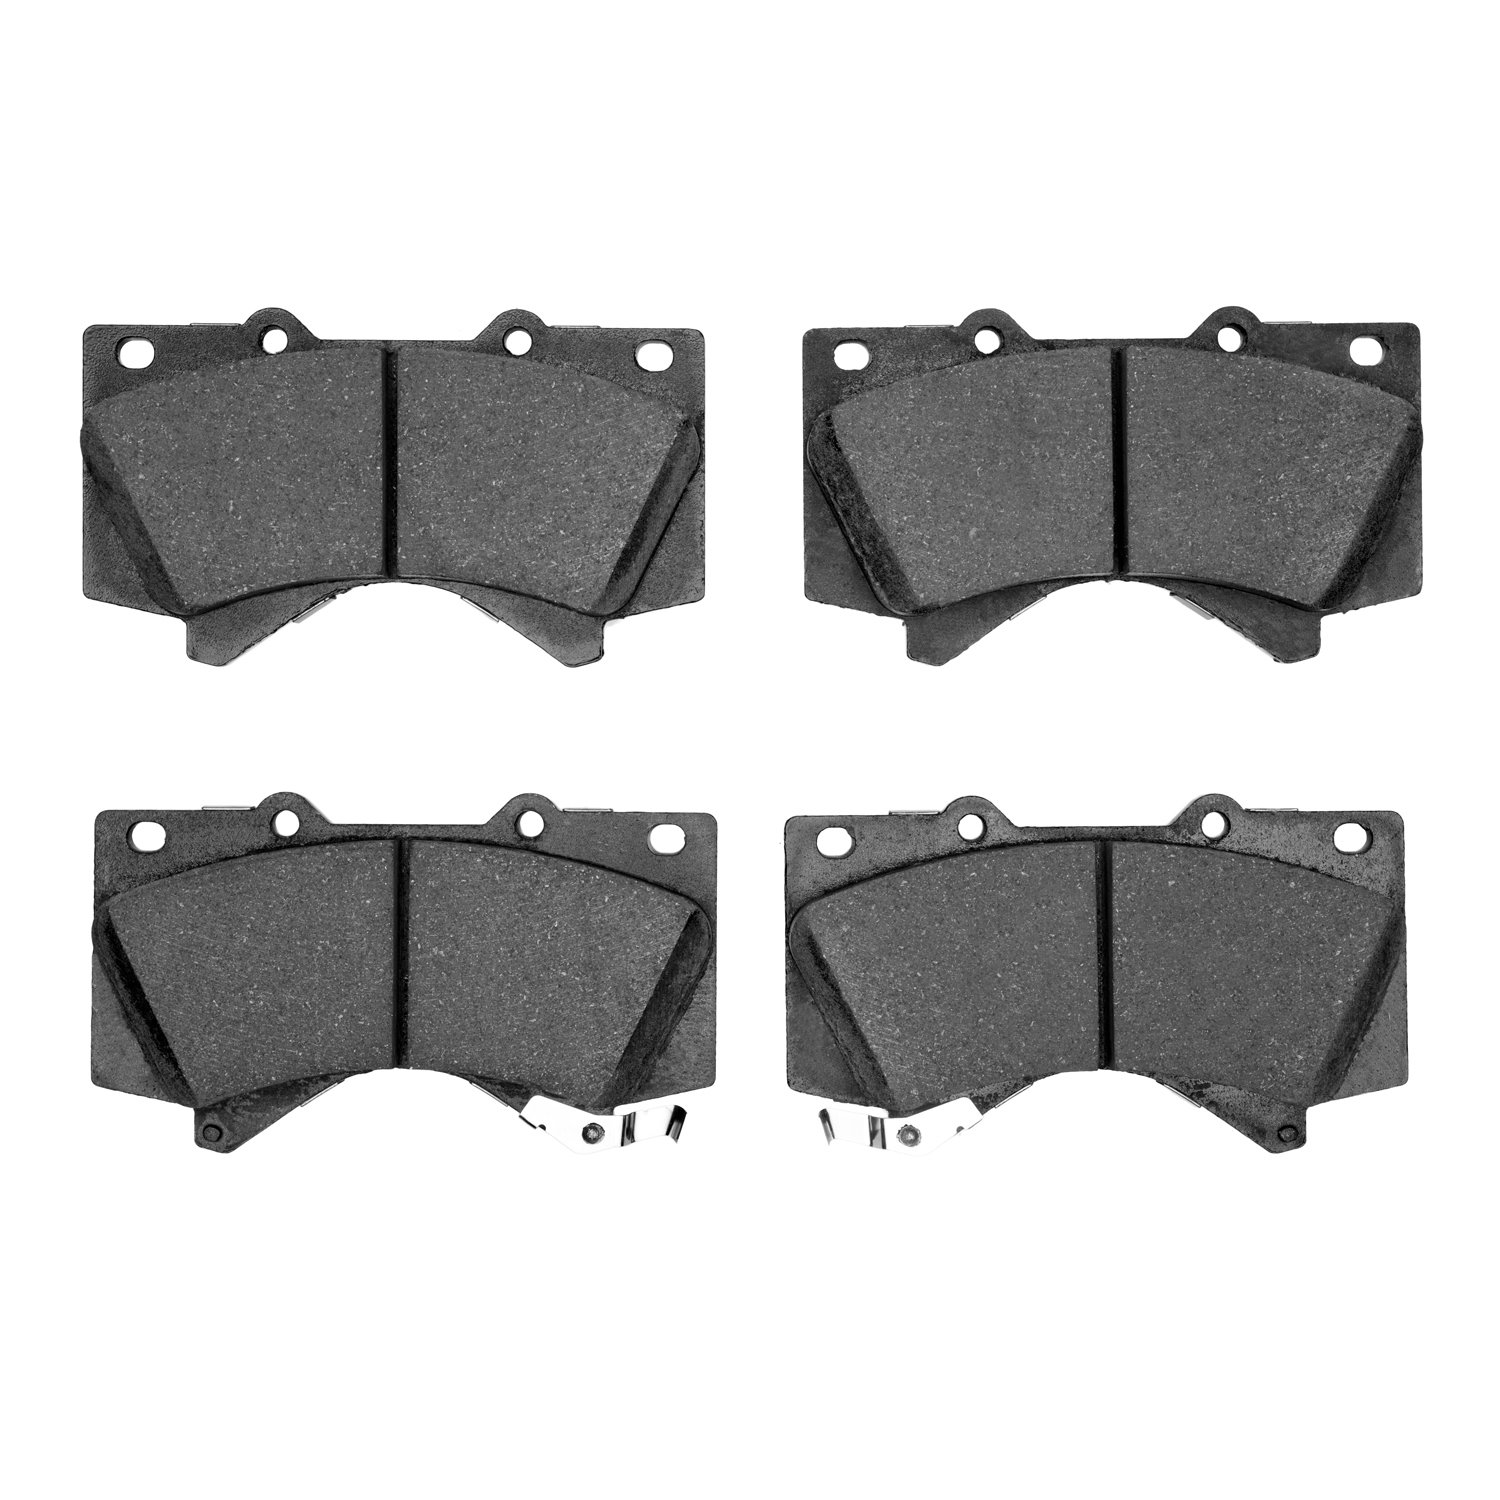 1551-1303-00 5000 Advanced Ceramic Brake Pads, Fits Select Lexus/Toyota/Scion, Position: Front